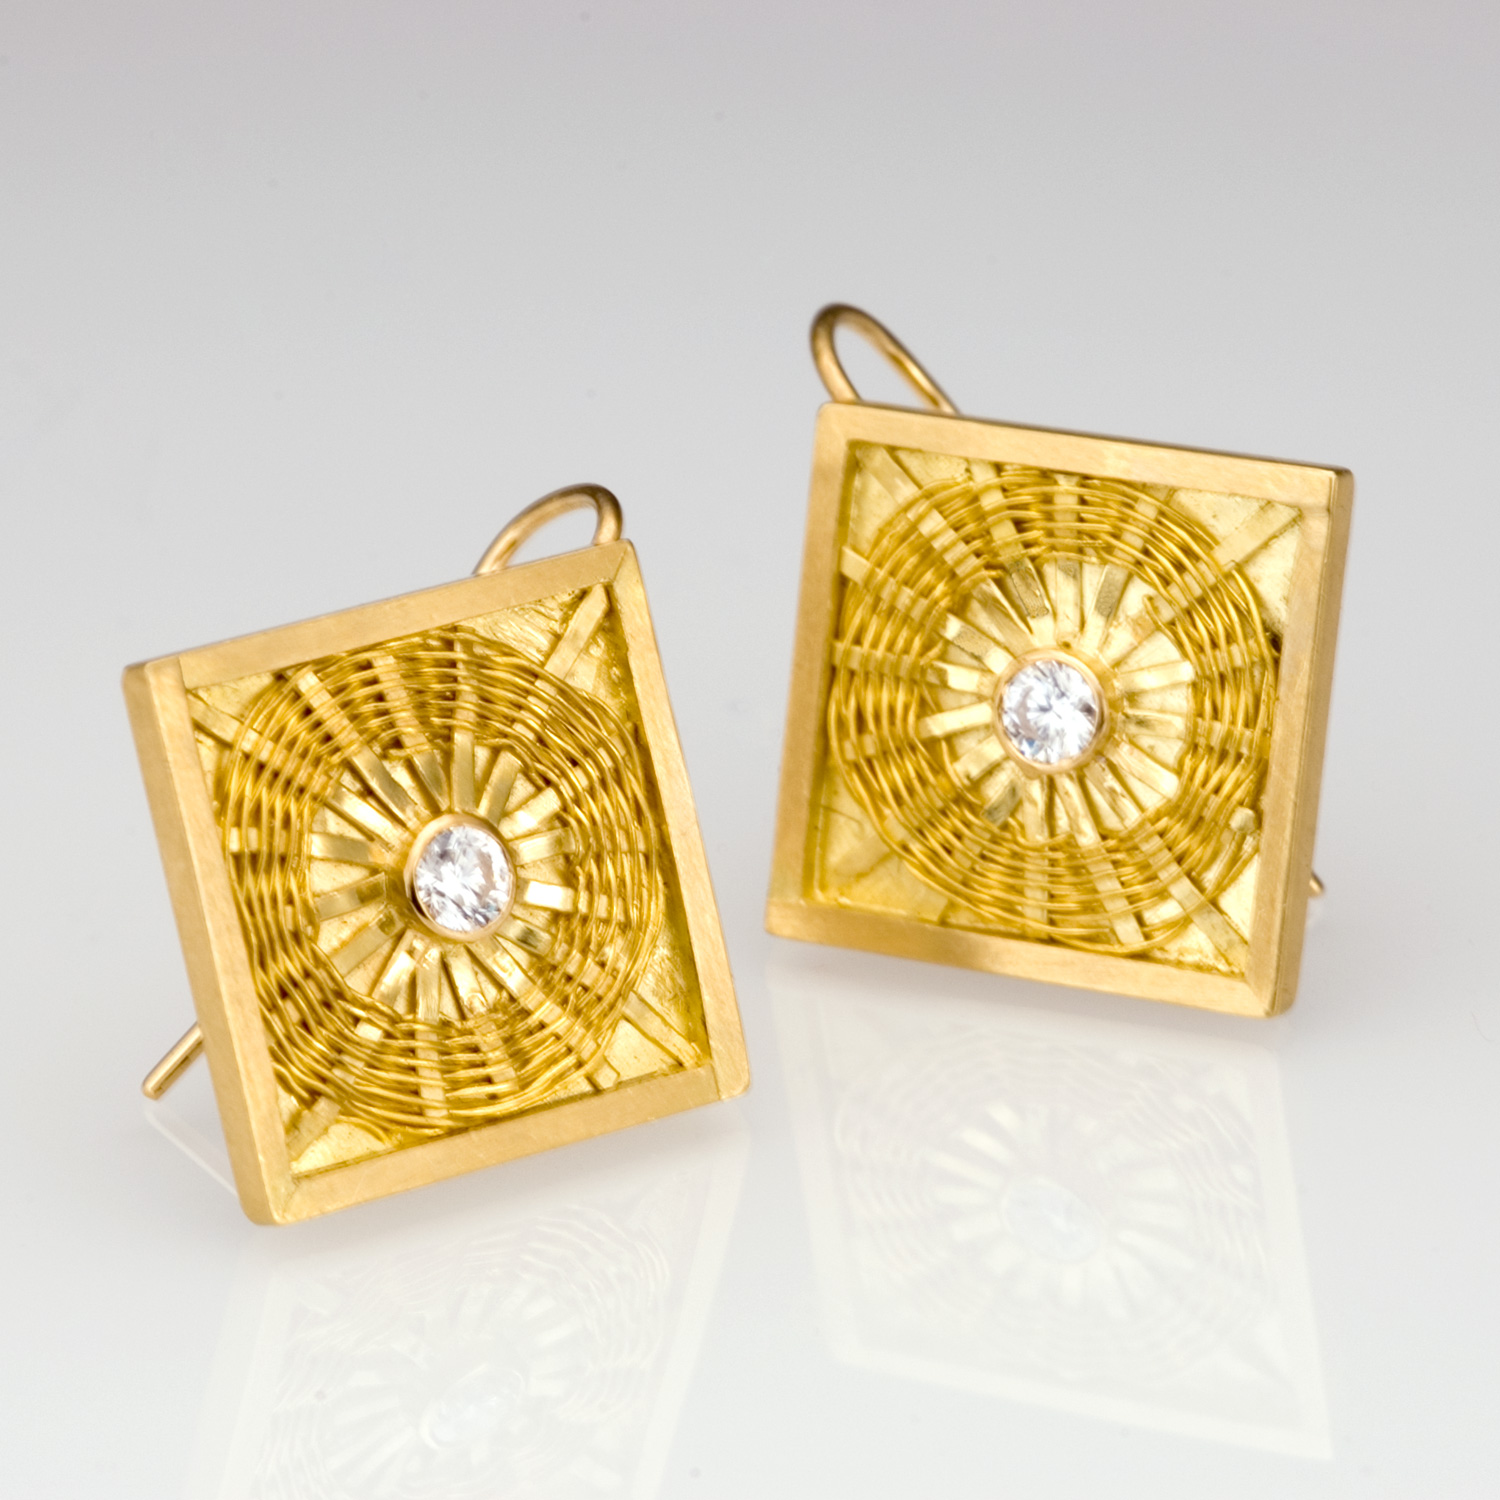 Diamond Sunburst Weave Earrings in 18k & 22k gold with diamonds by Tamberlaine